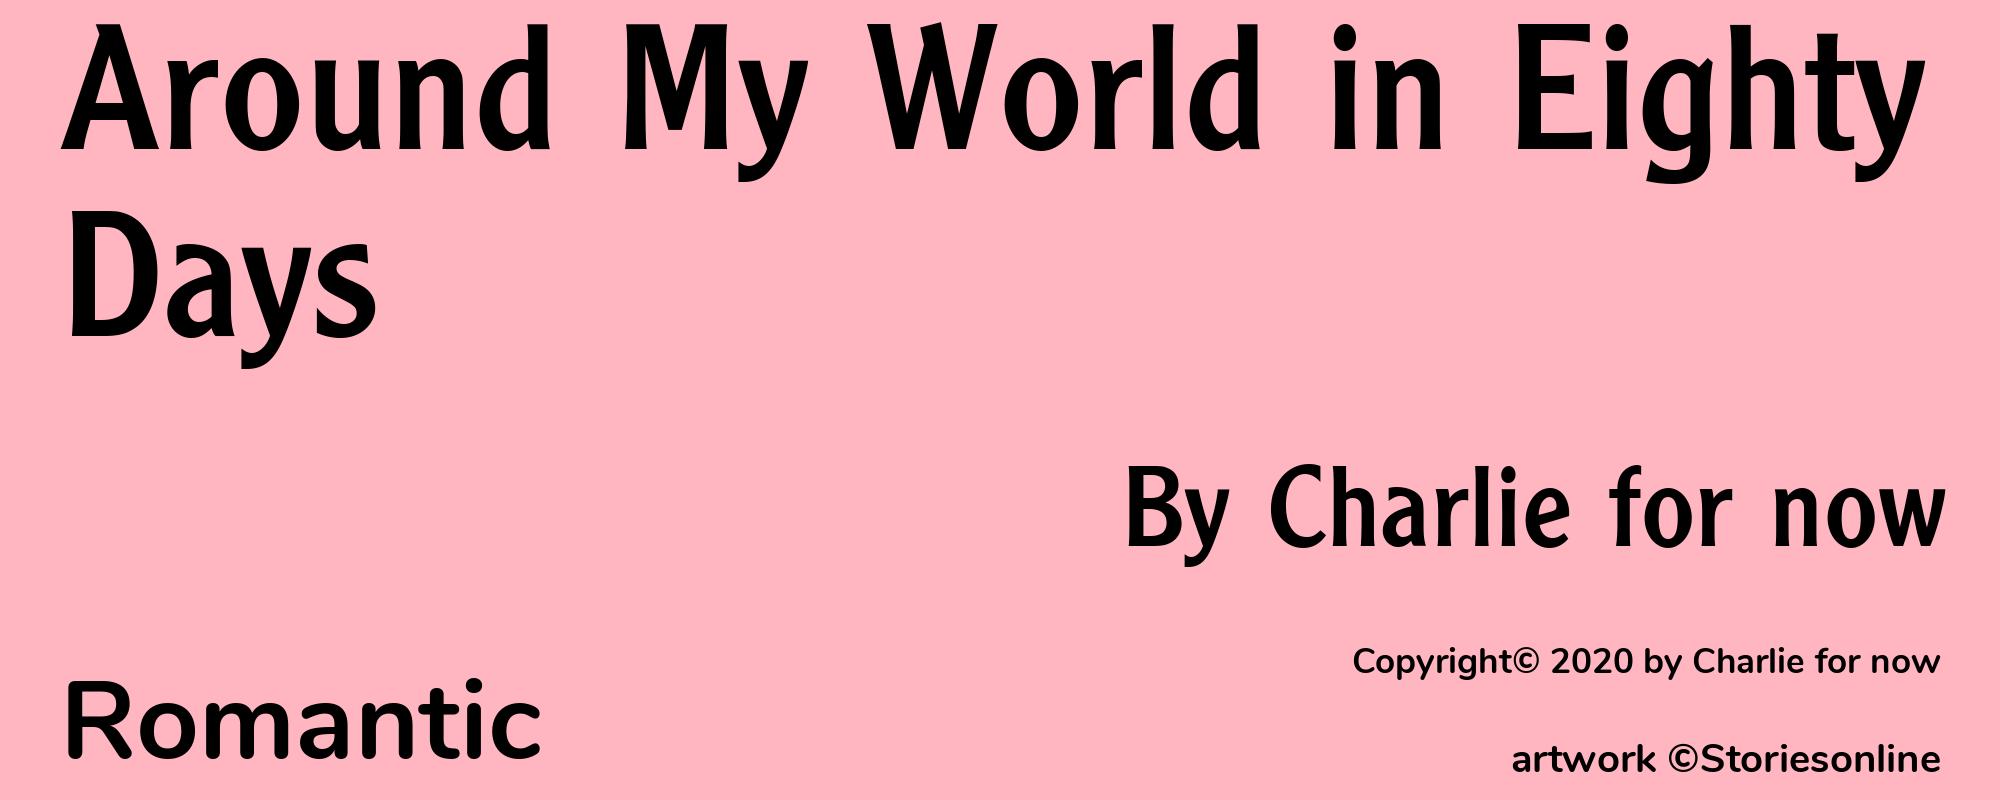 Around My World in Eighty Days - Cover